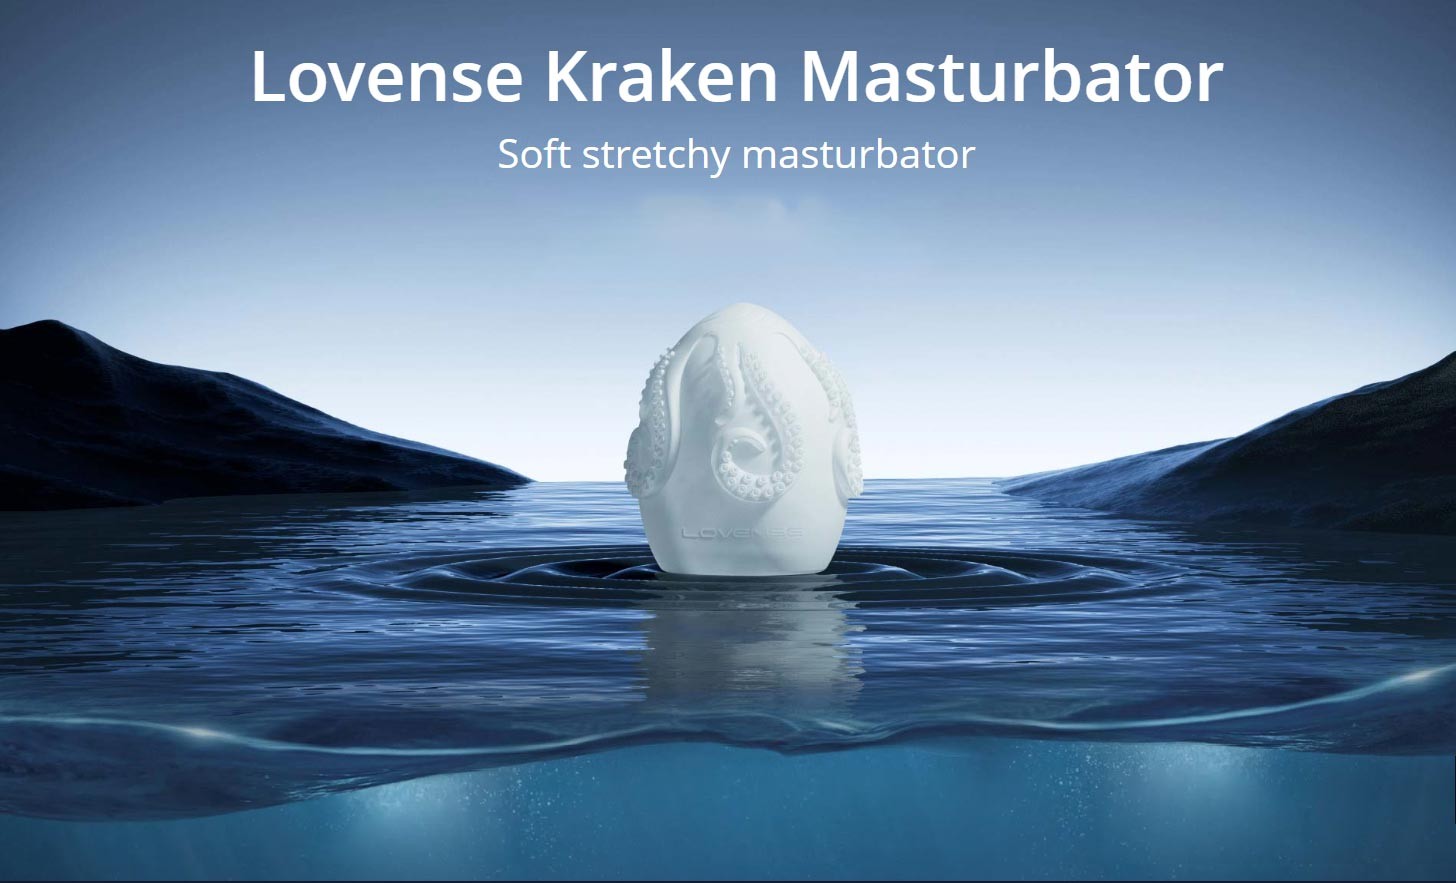 Lovense Kraken Masturbator Soft stretchy masturbator